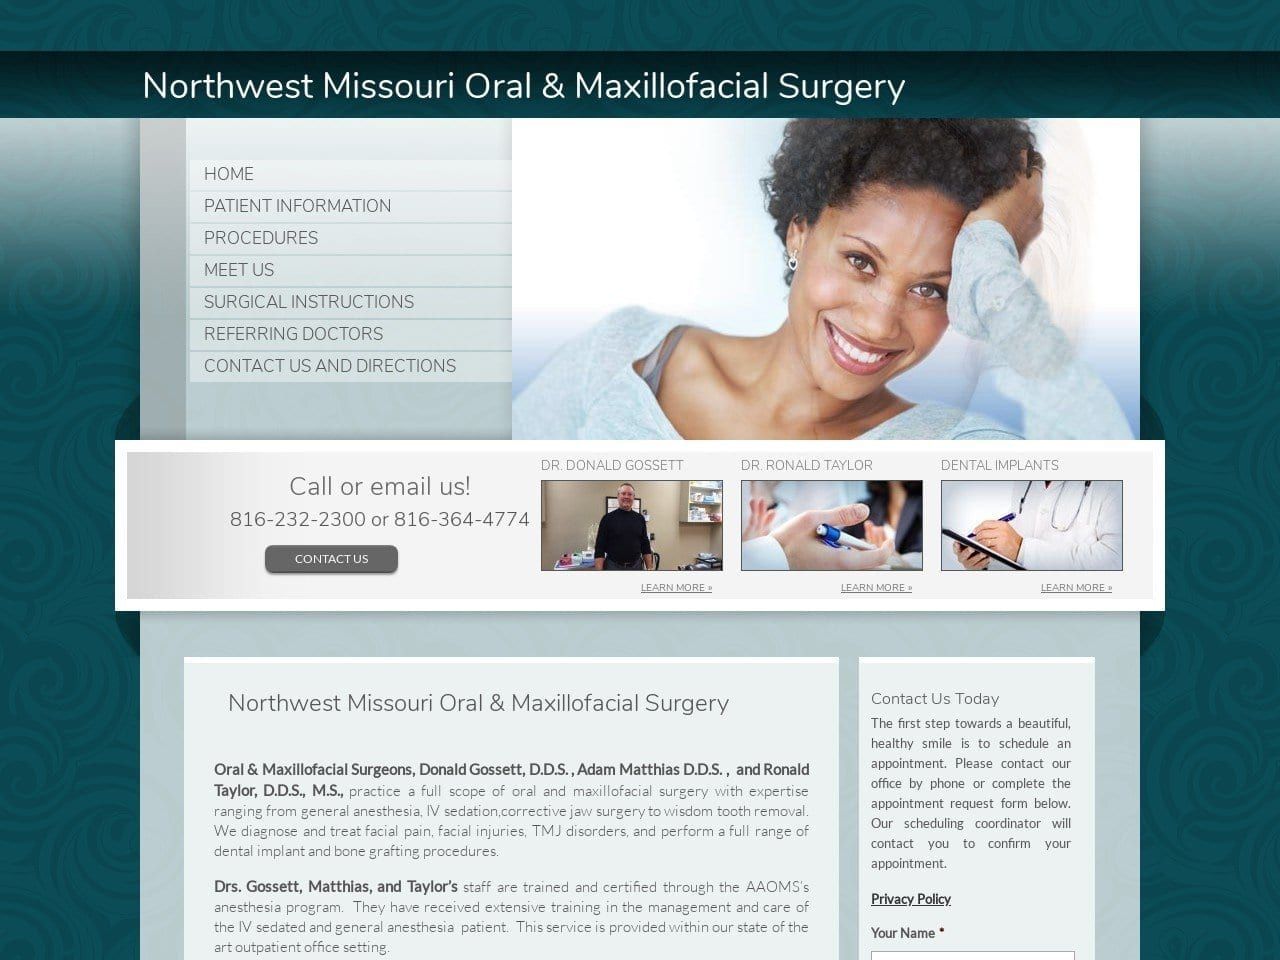 Northwest Missouri Oral Surgery Website Screenshot from nwmos.com